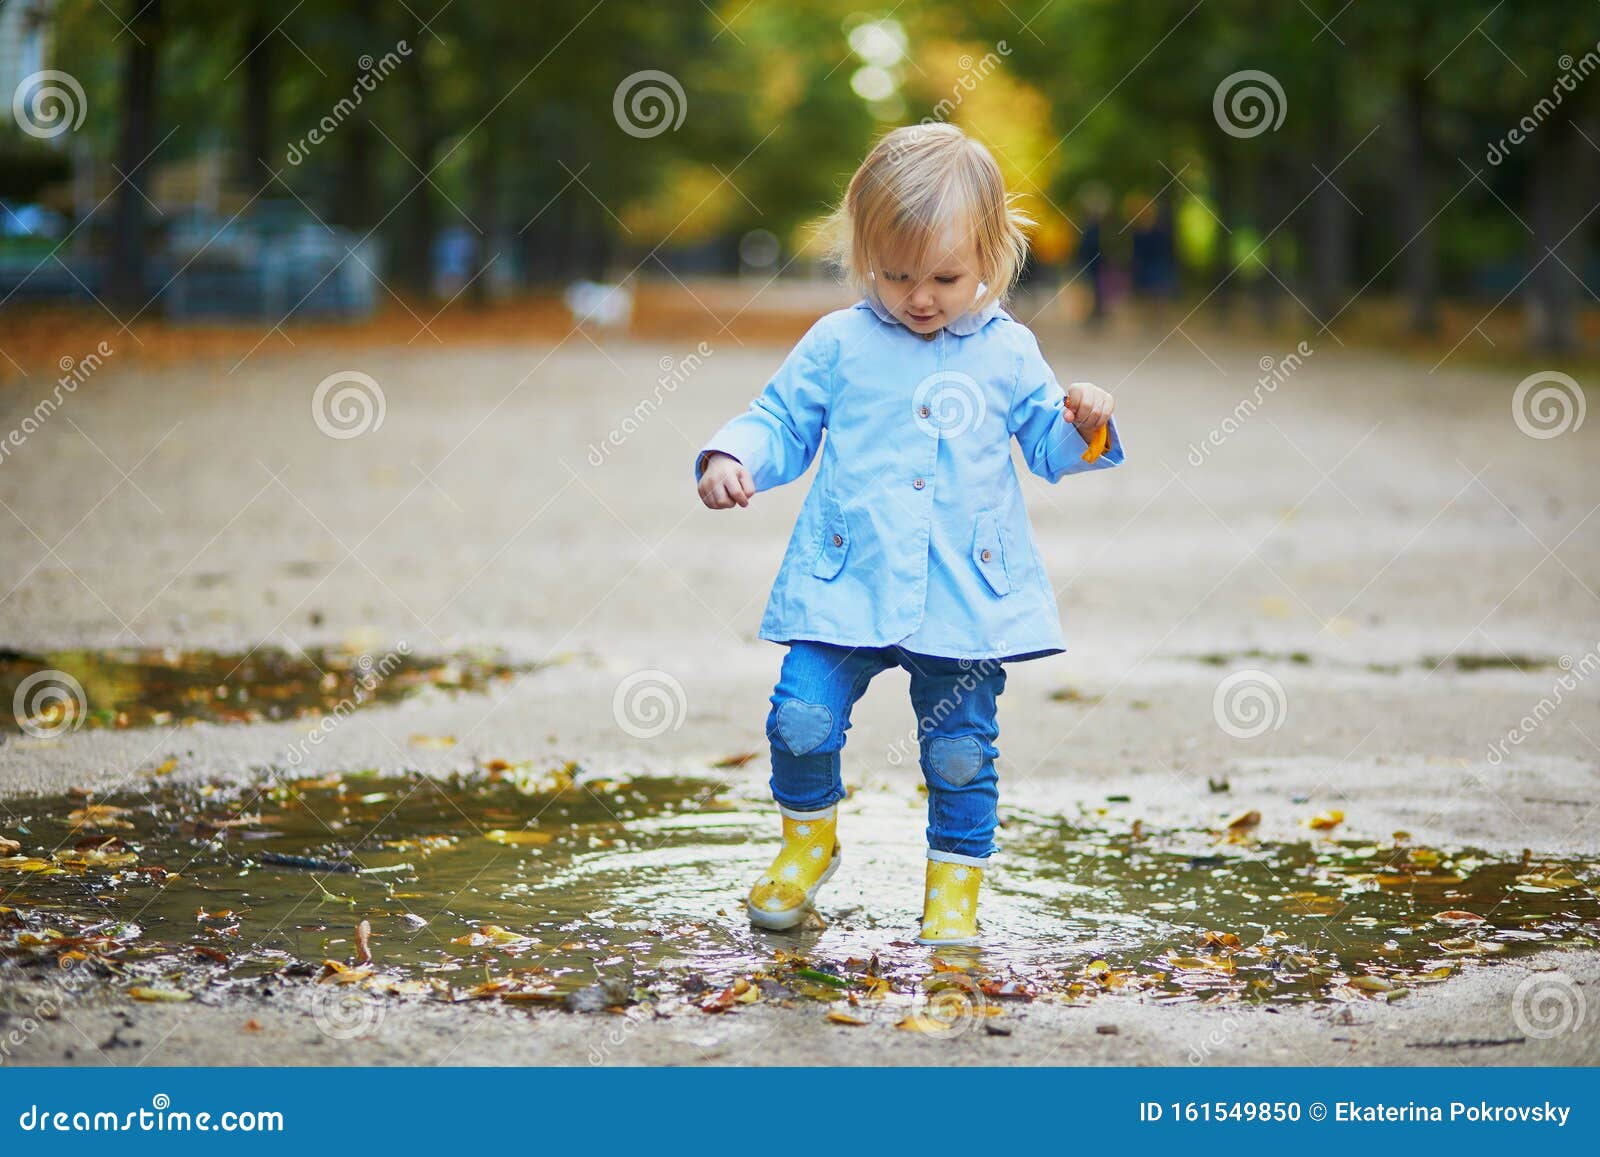 Child Wearing Yellow Rain Boots and 